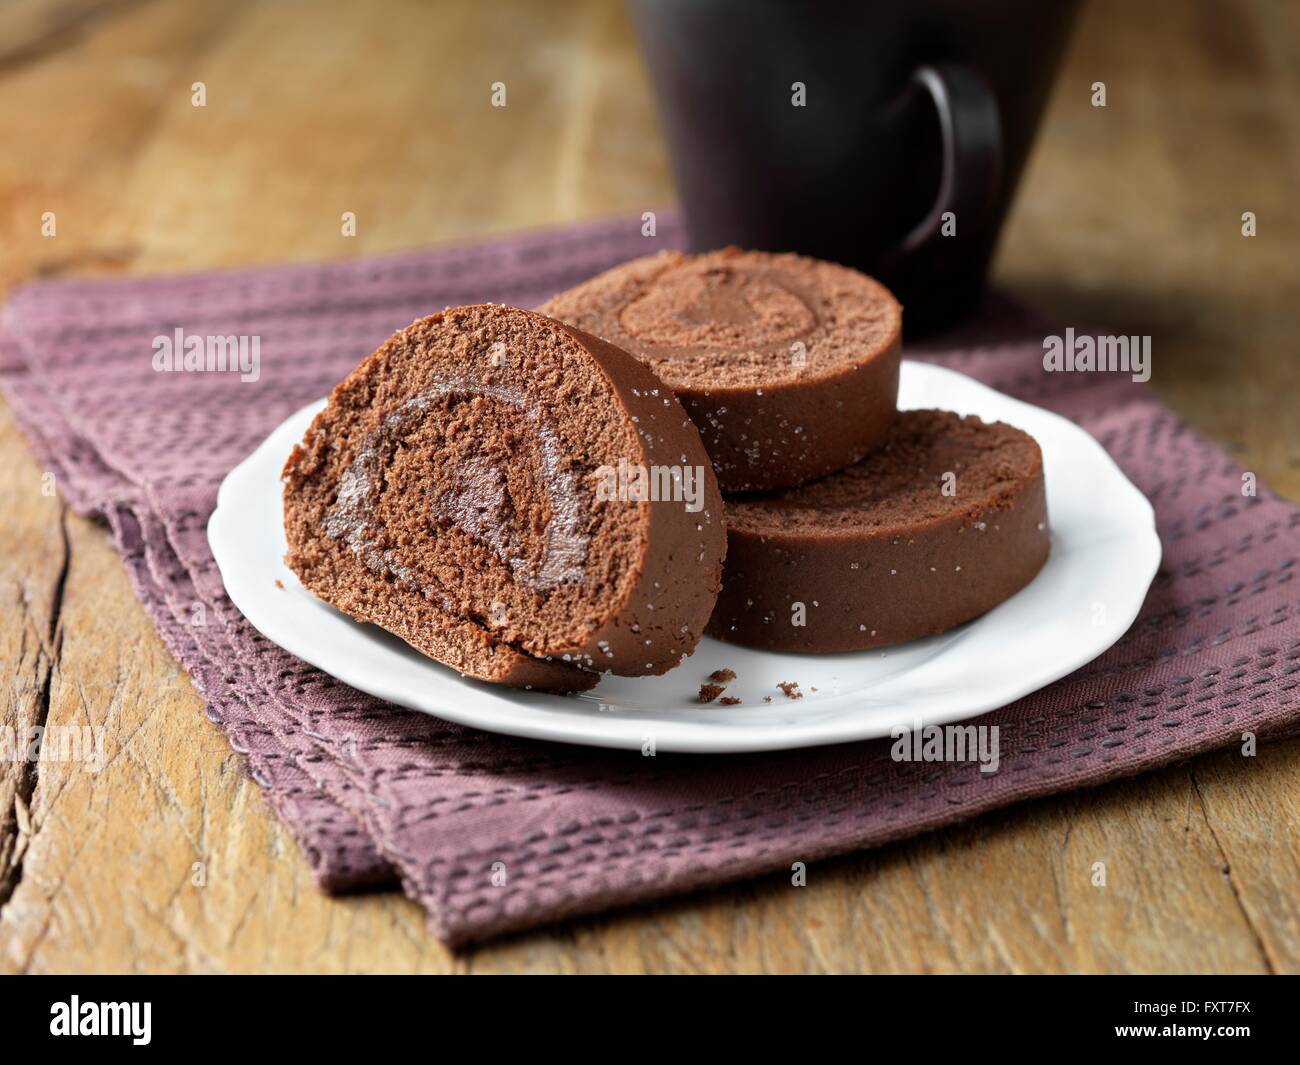 Chocolate sponge roll, purple napkin Stock Photo